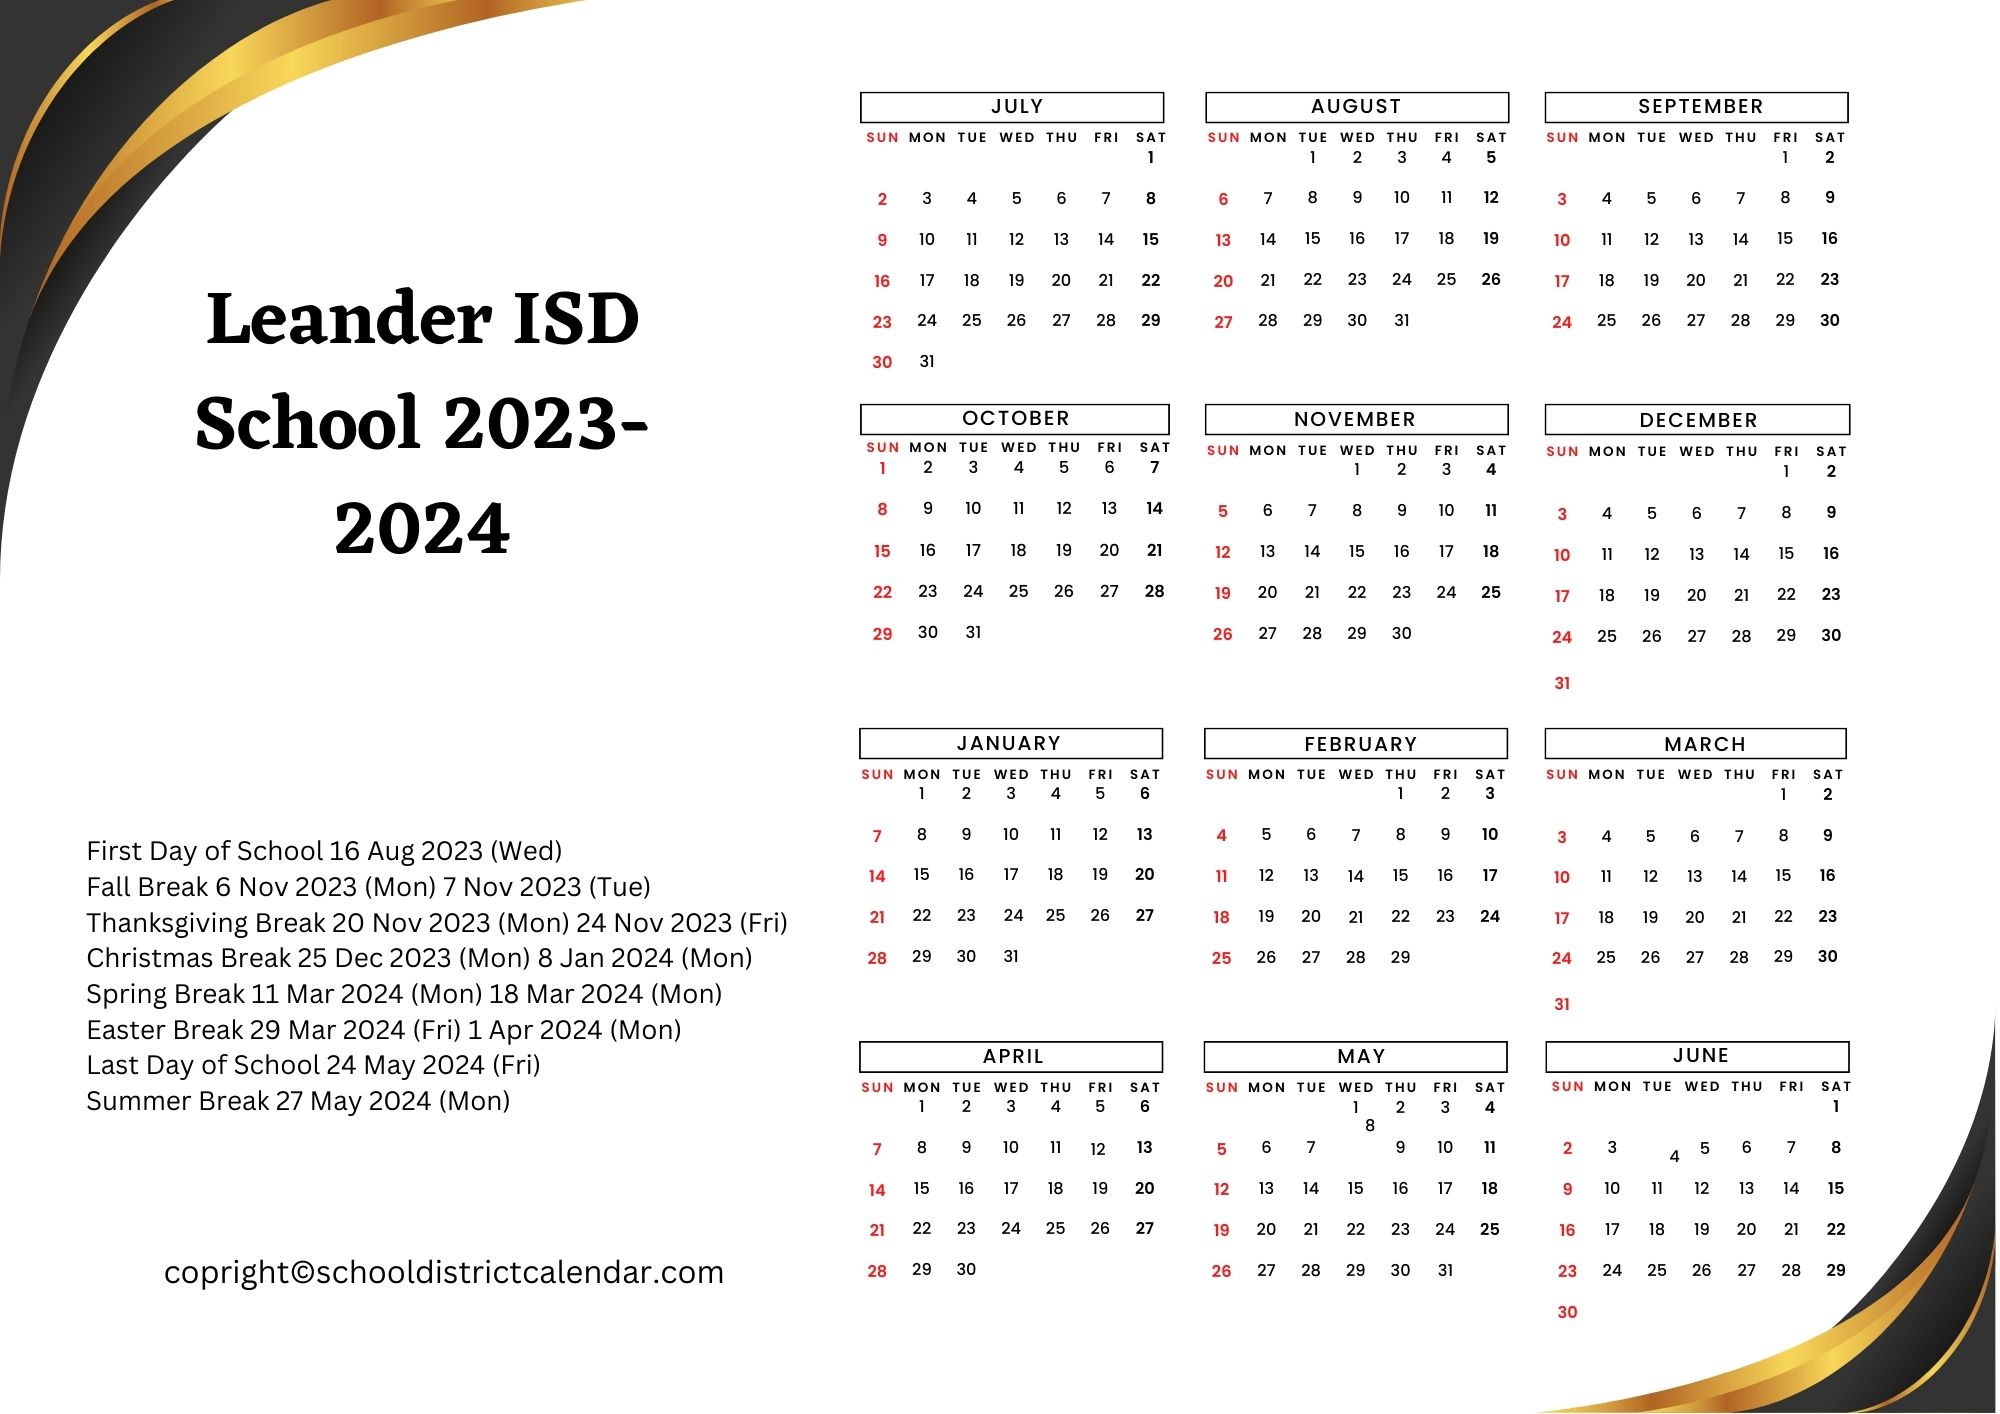 leander-isd-school-calendar-holidays-2023-2024